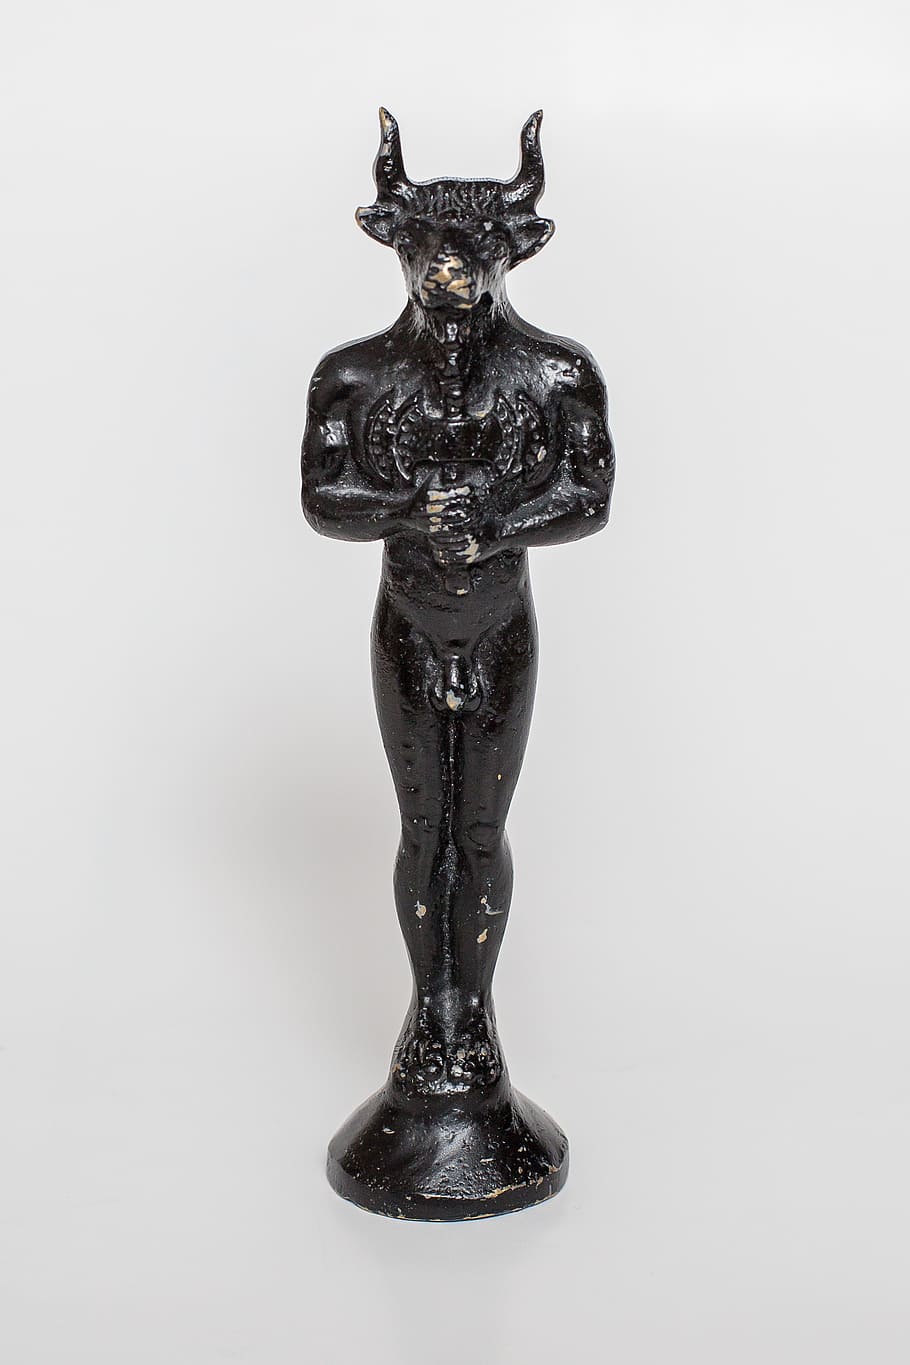 black bull figurine, crete, myth, statue, minotaur, greece, antiquity, art and craft, representation, sculpture